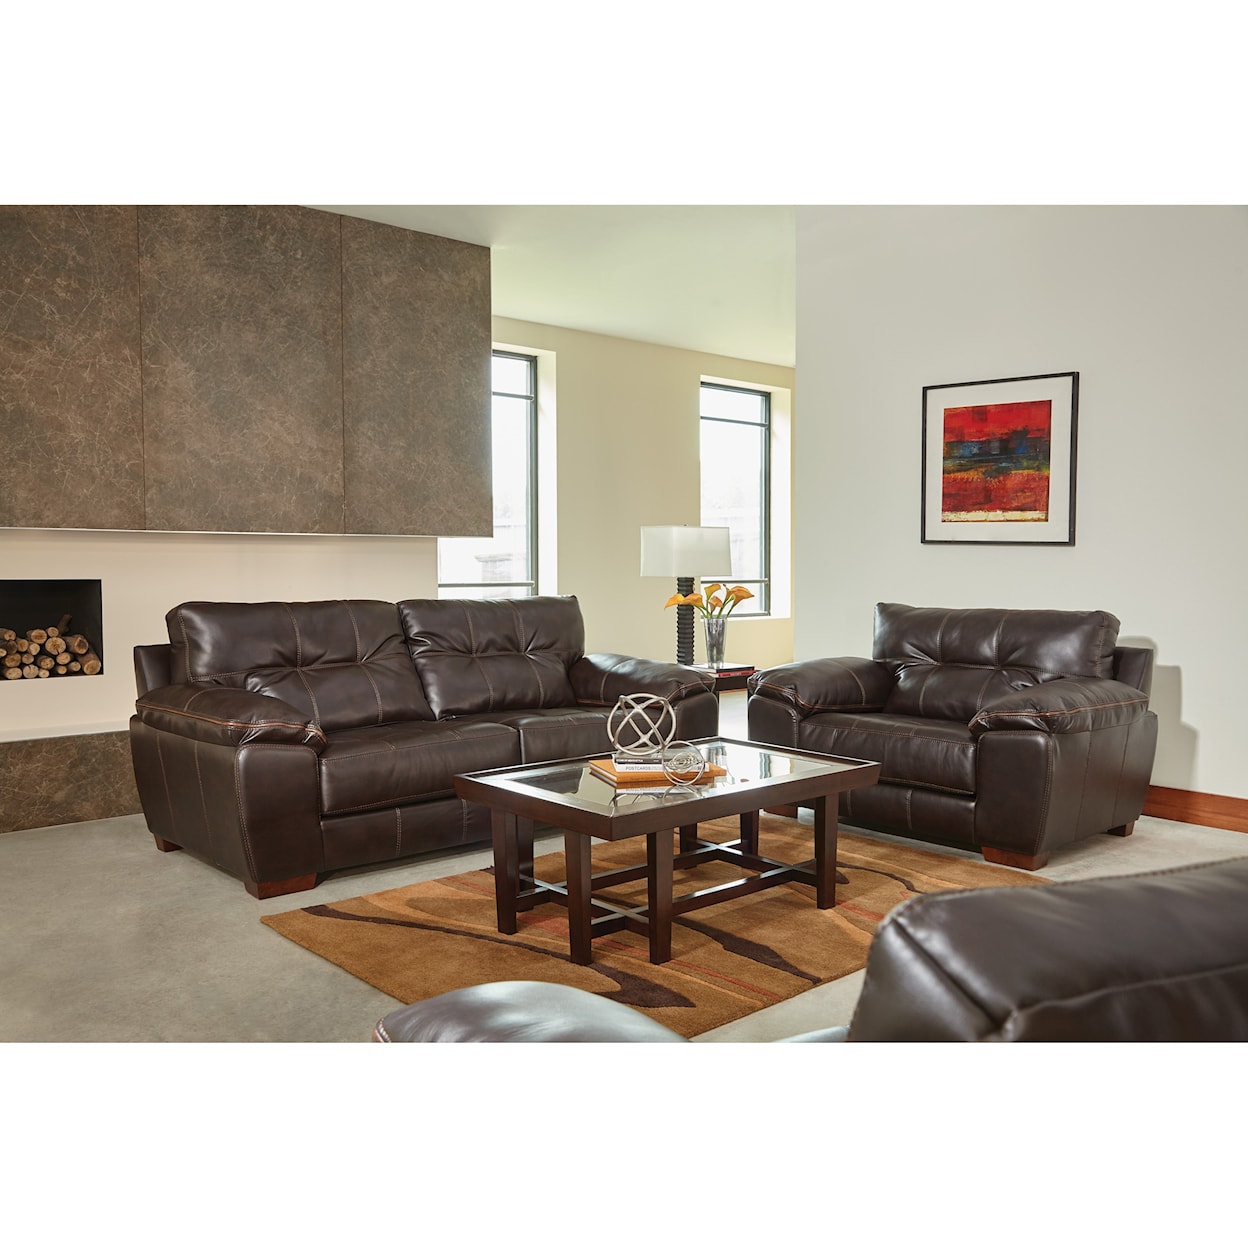 Jackson Furniture 4396 Hudson 3pc living room group